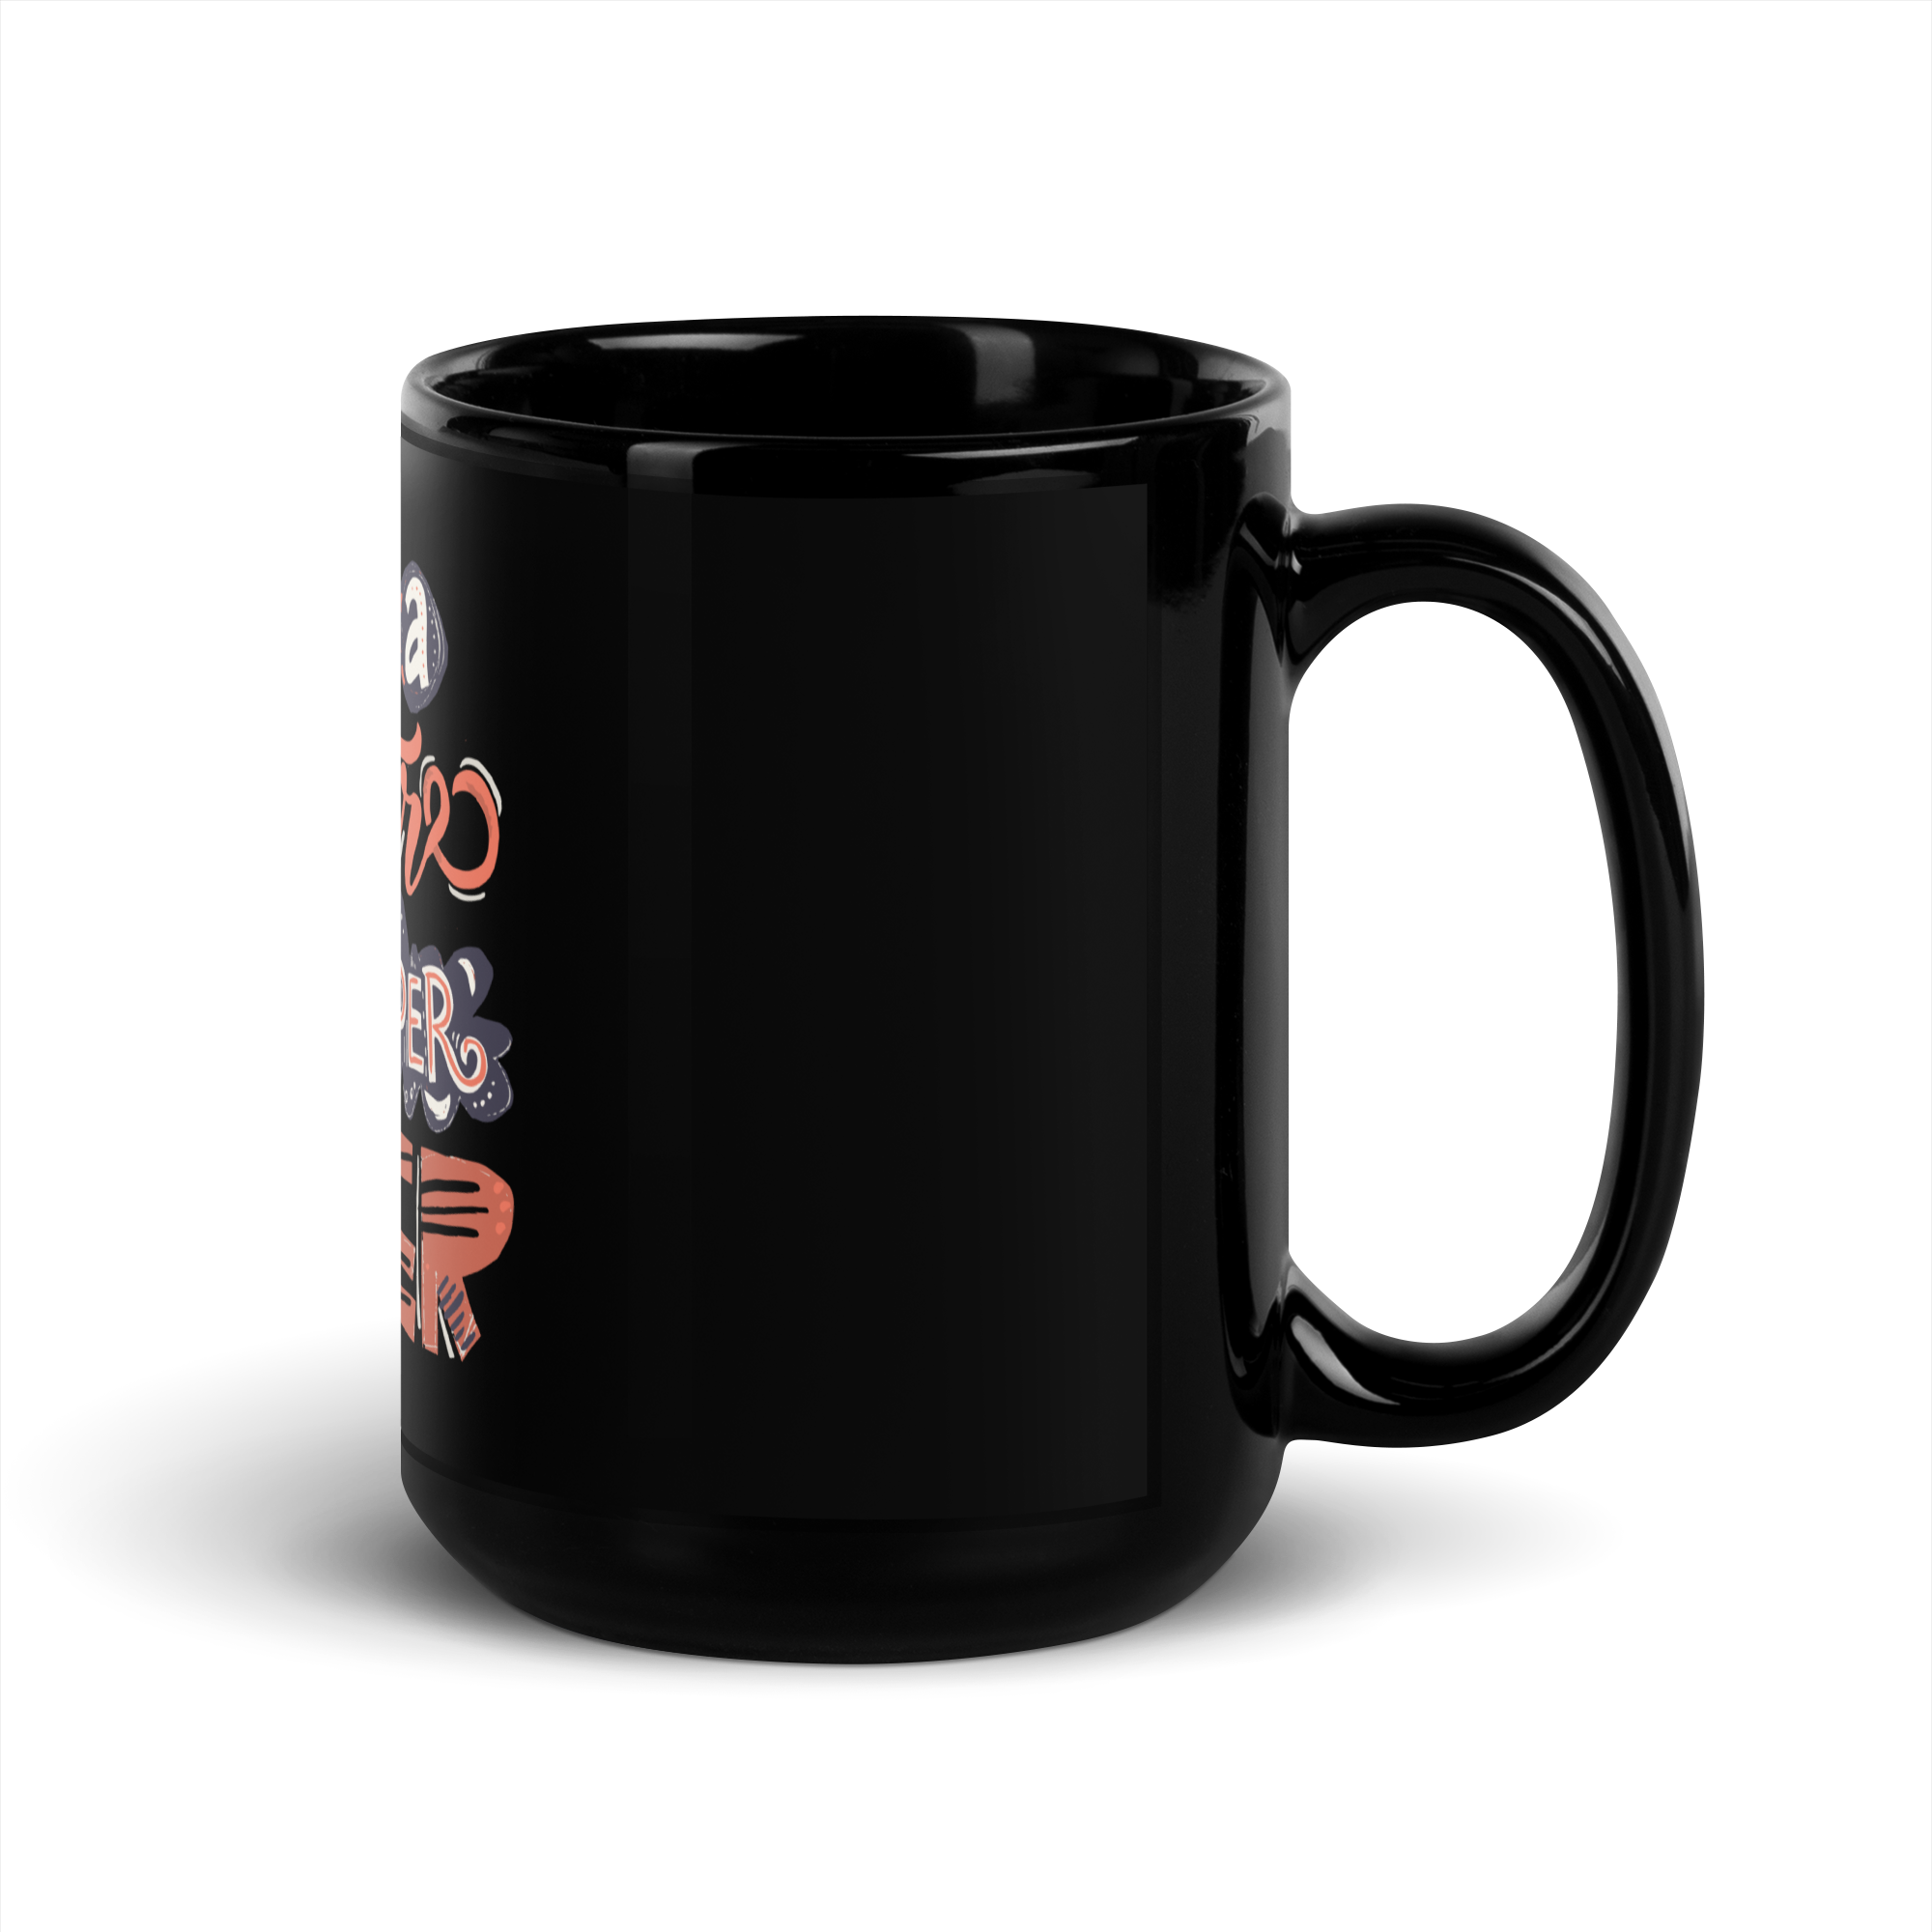 Excellent Black Glossy Mug